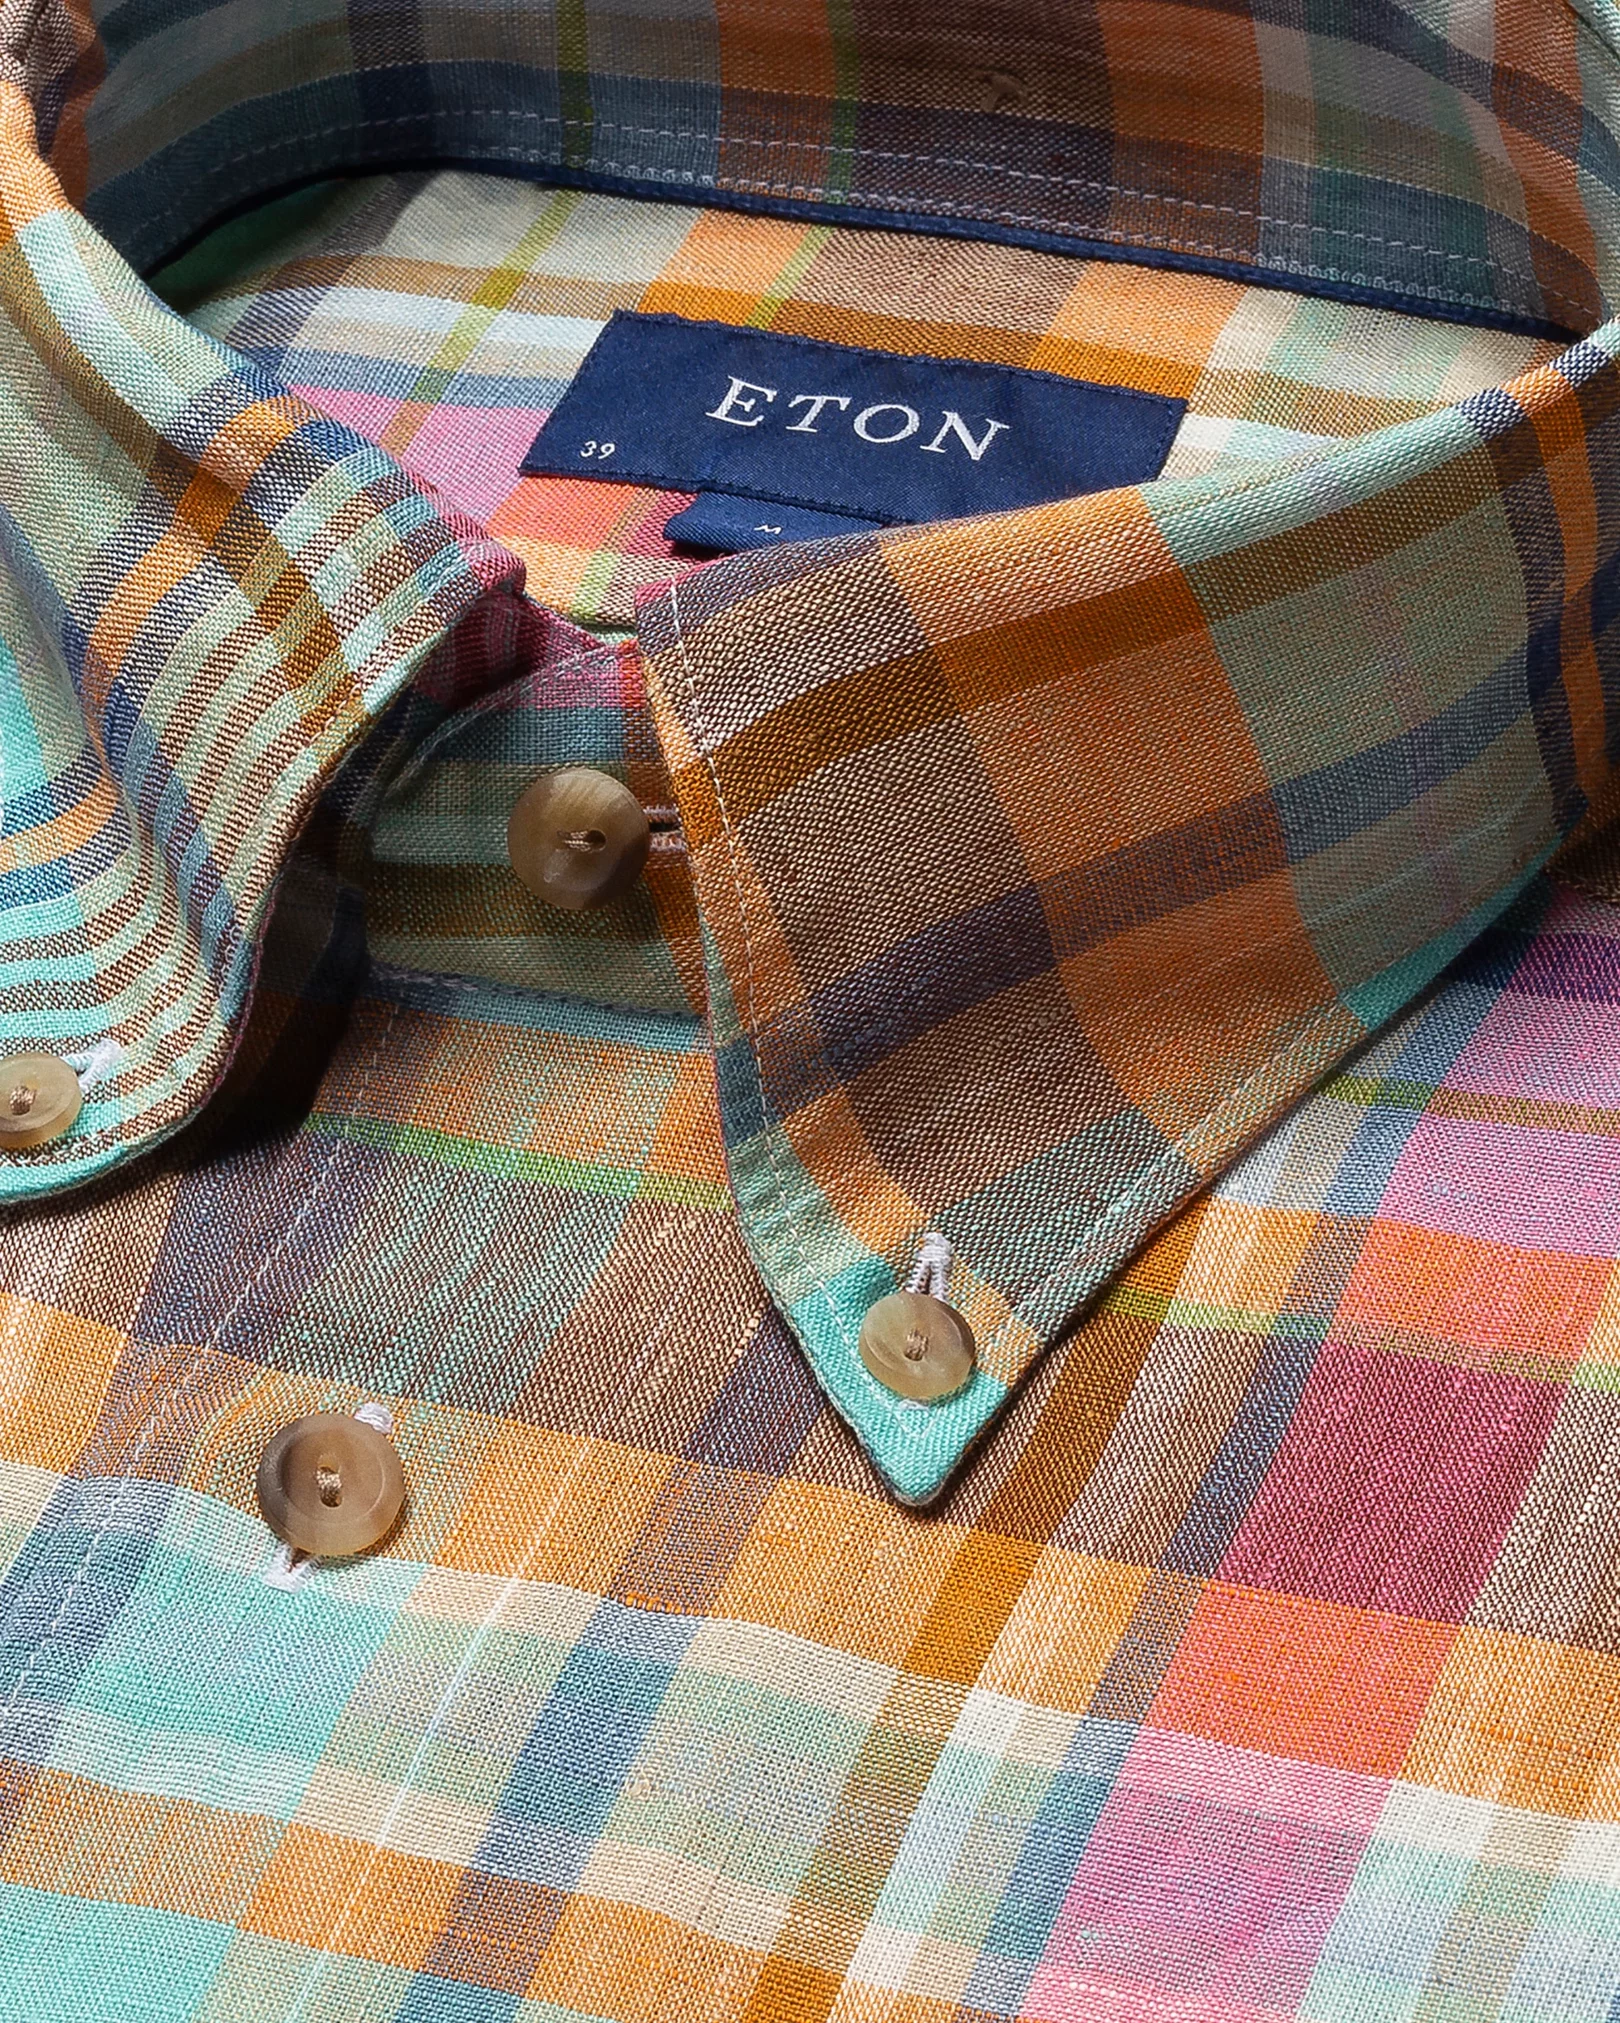 Eton - multi colored linen shirt